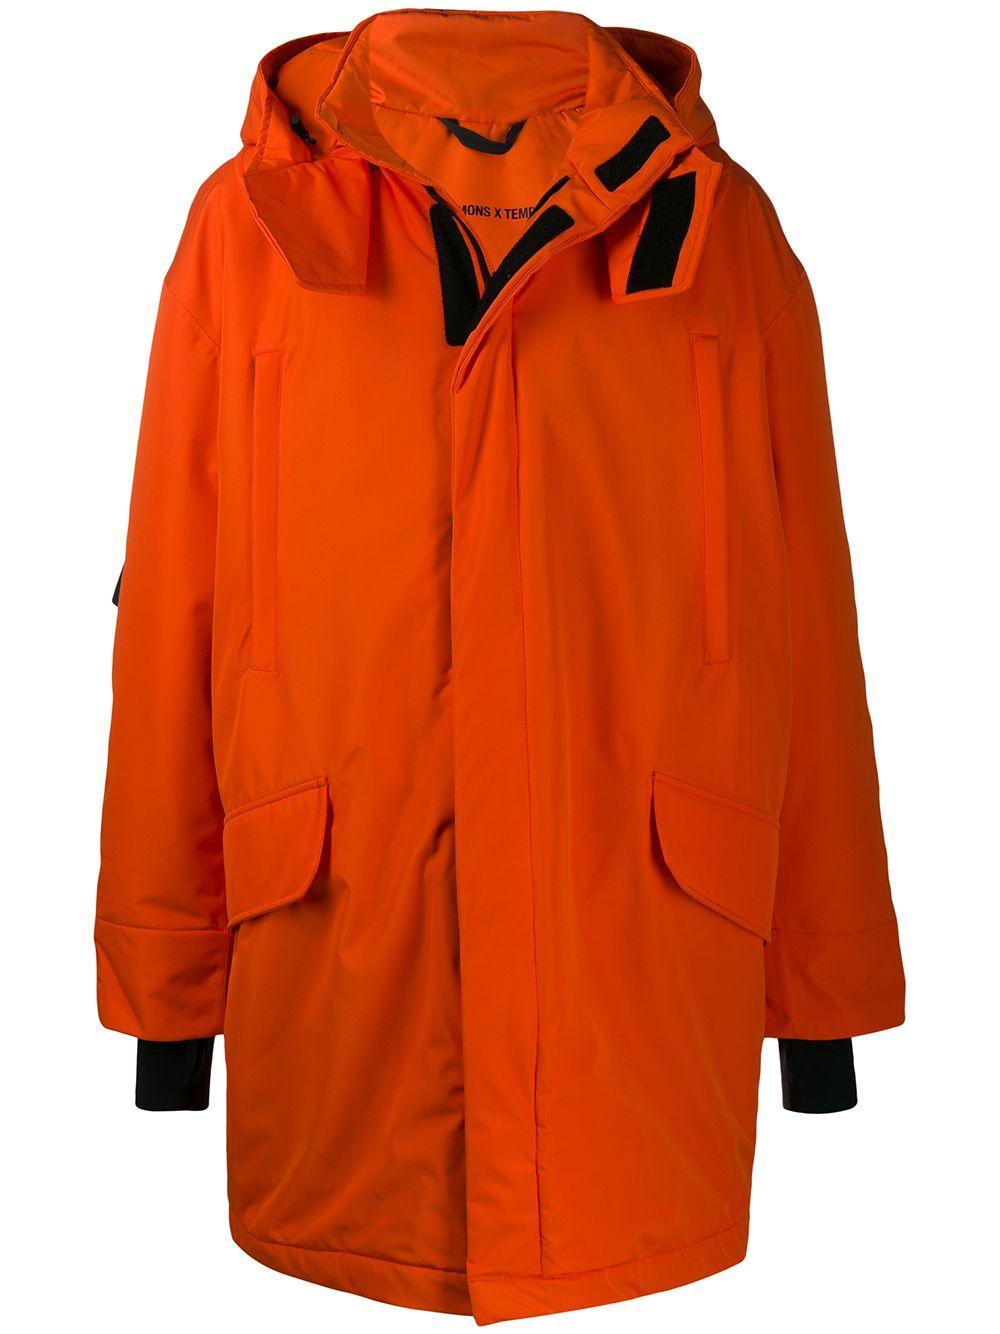 Raf Simons X Templa Oversized Ski Jacket in Orange for Men - Lyst